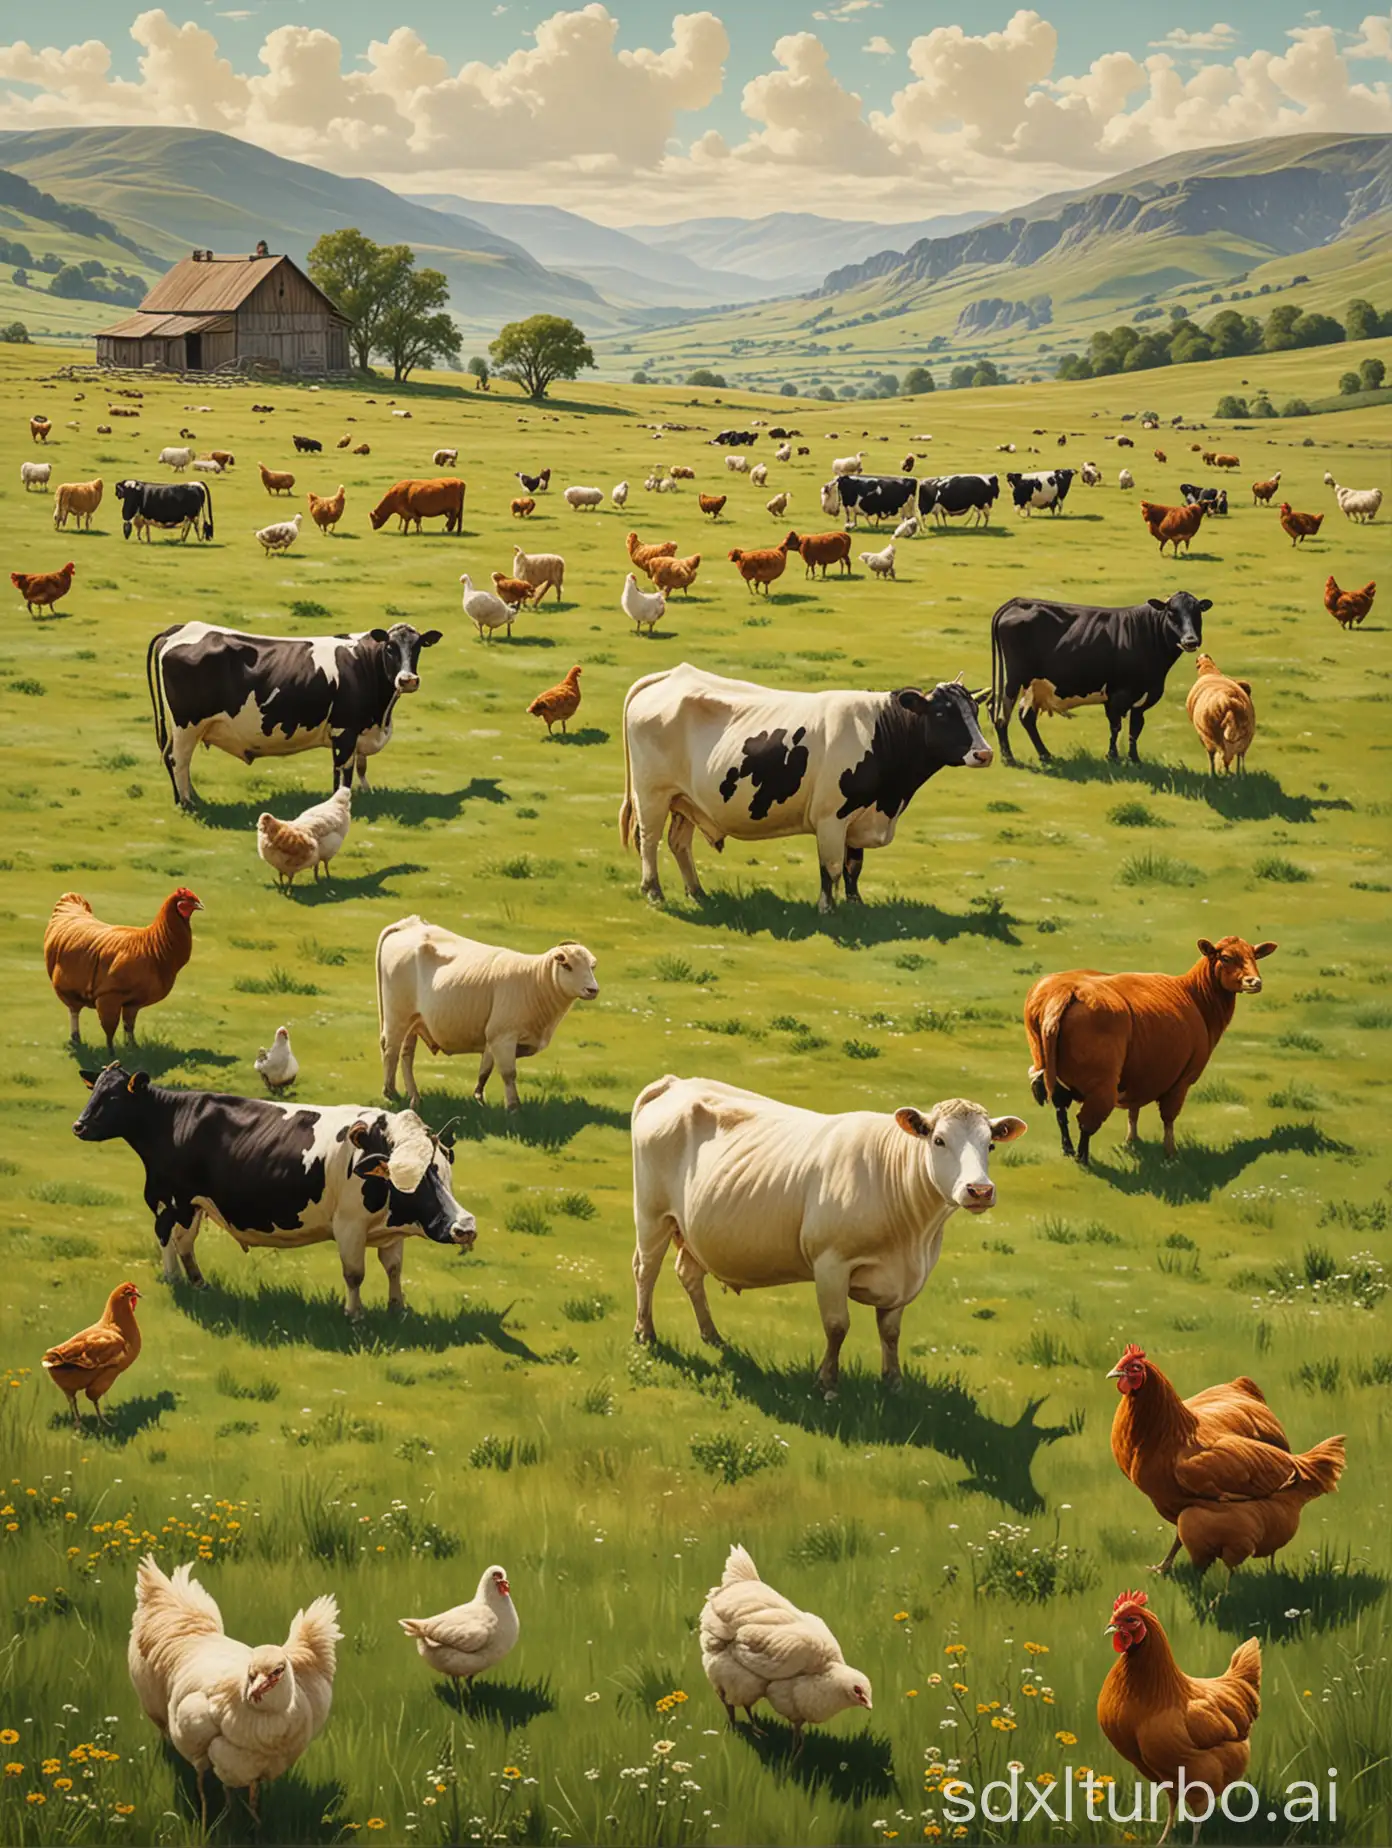 Rural-Farm-Animals-Grazing-in-Lush-Grassland-Poster